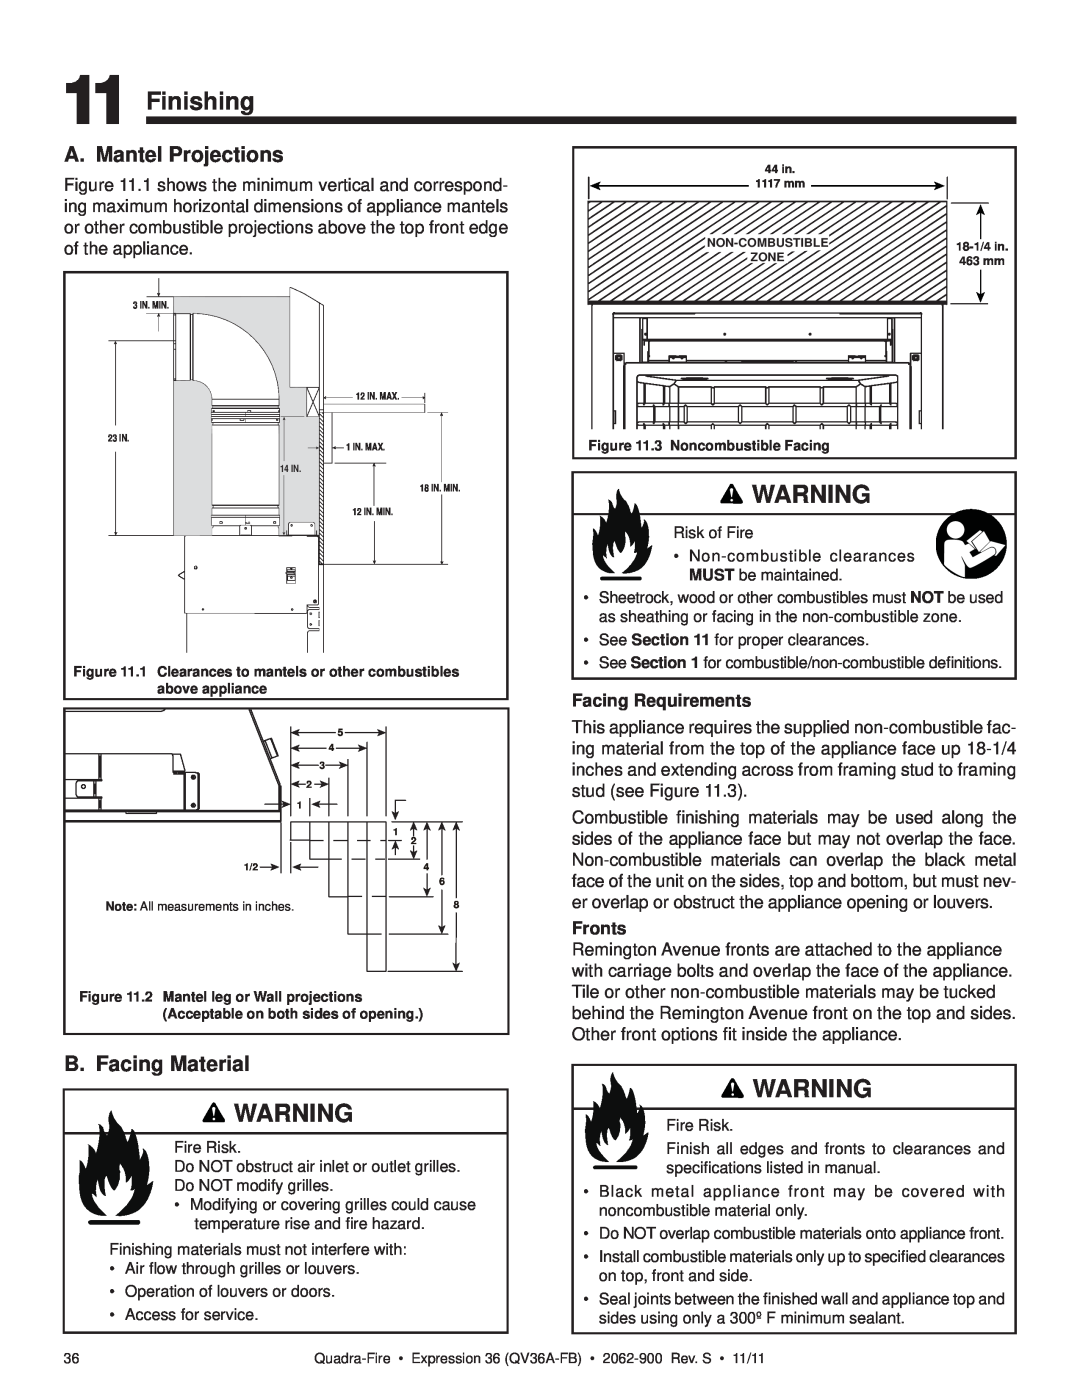 Quadra-Fire QV36A-FB owner manual Finishing, A. Mantel Projections, B. Facing Material, Facing Requirements, Fronts 